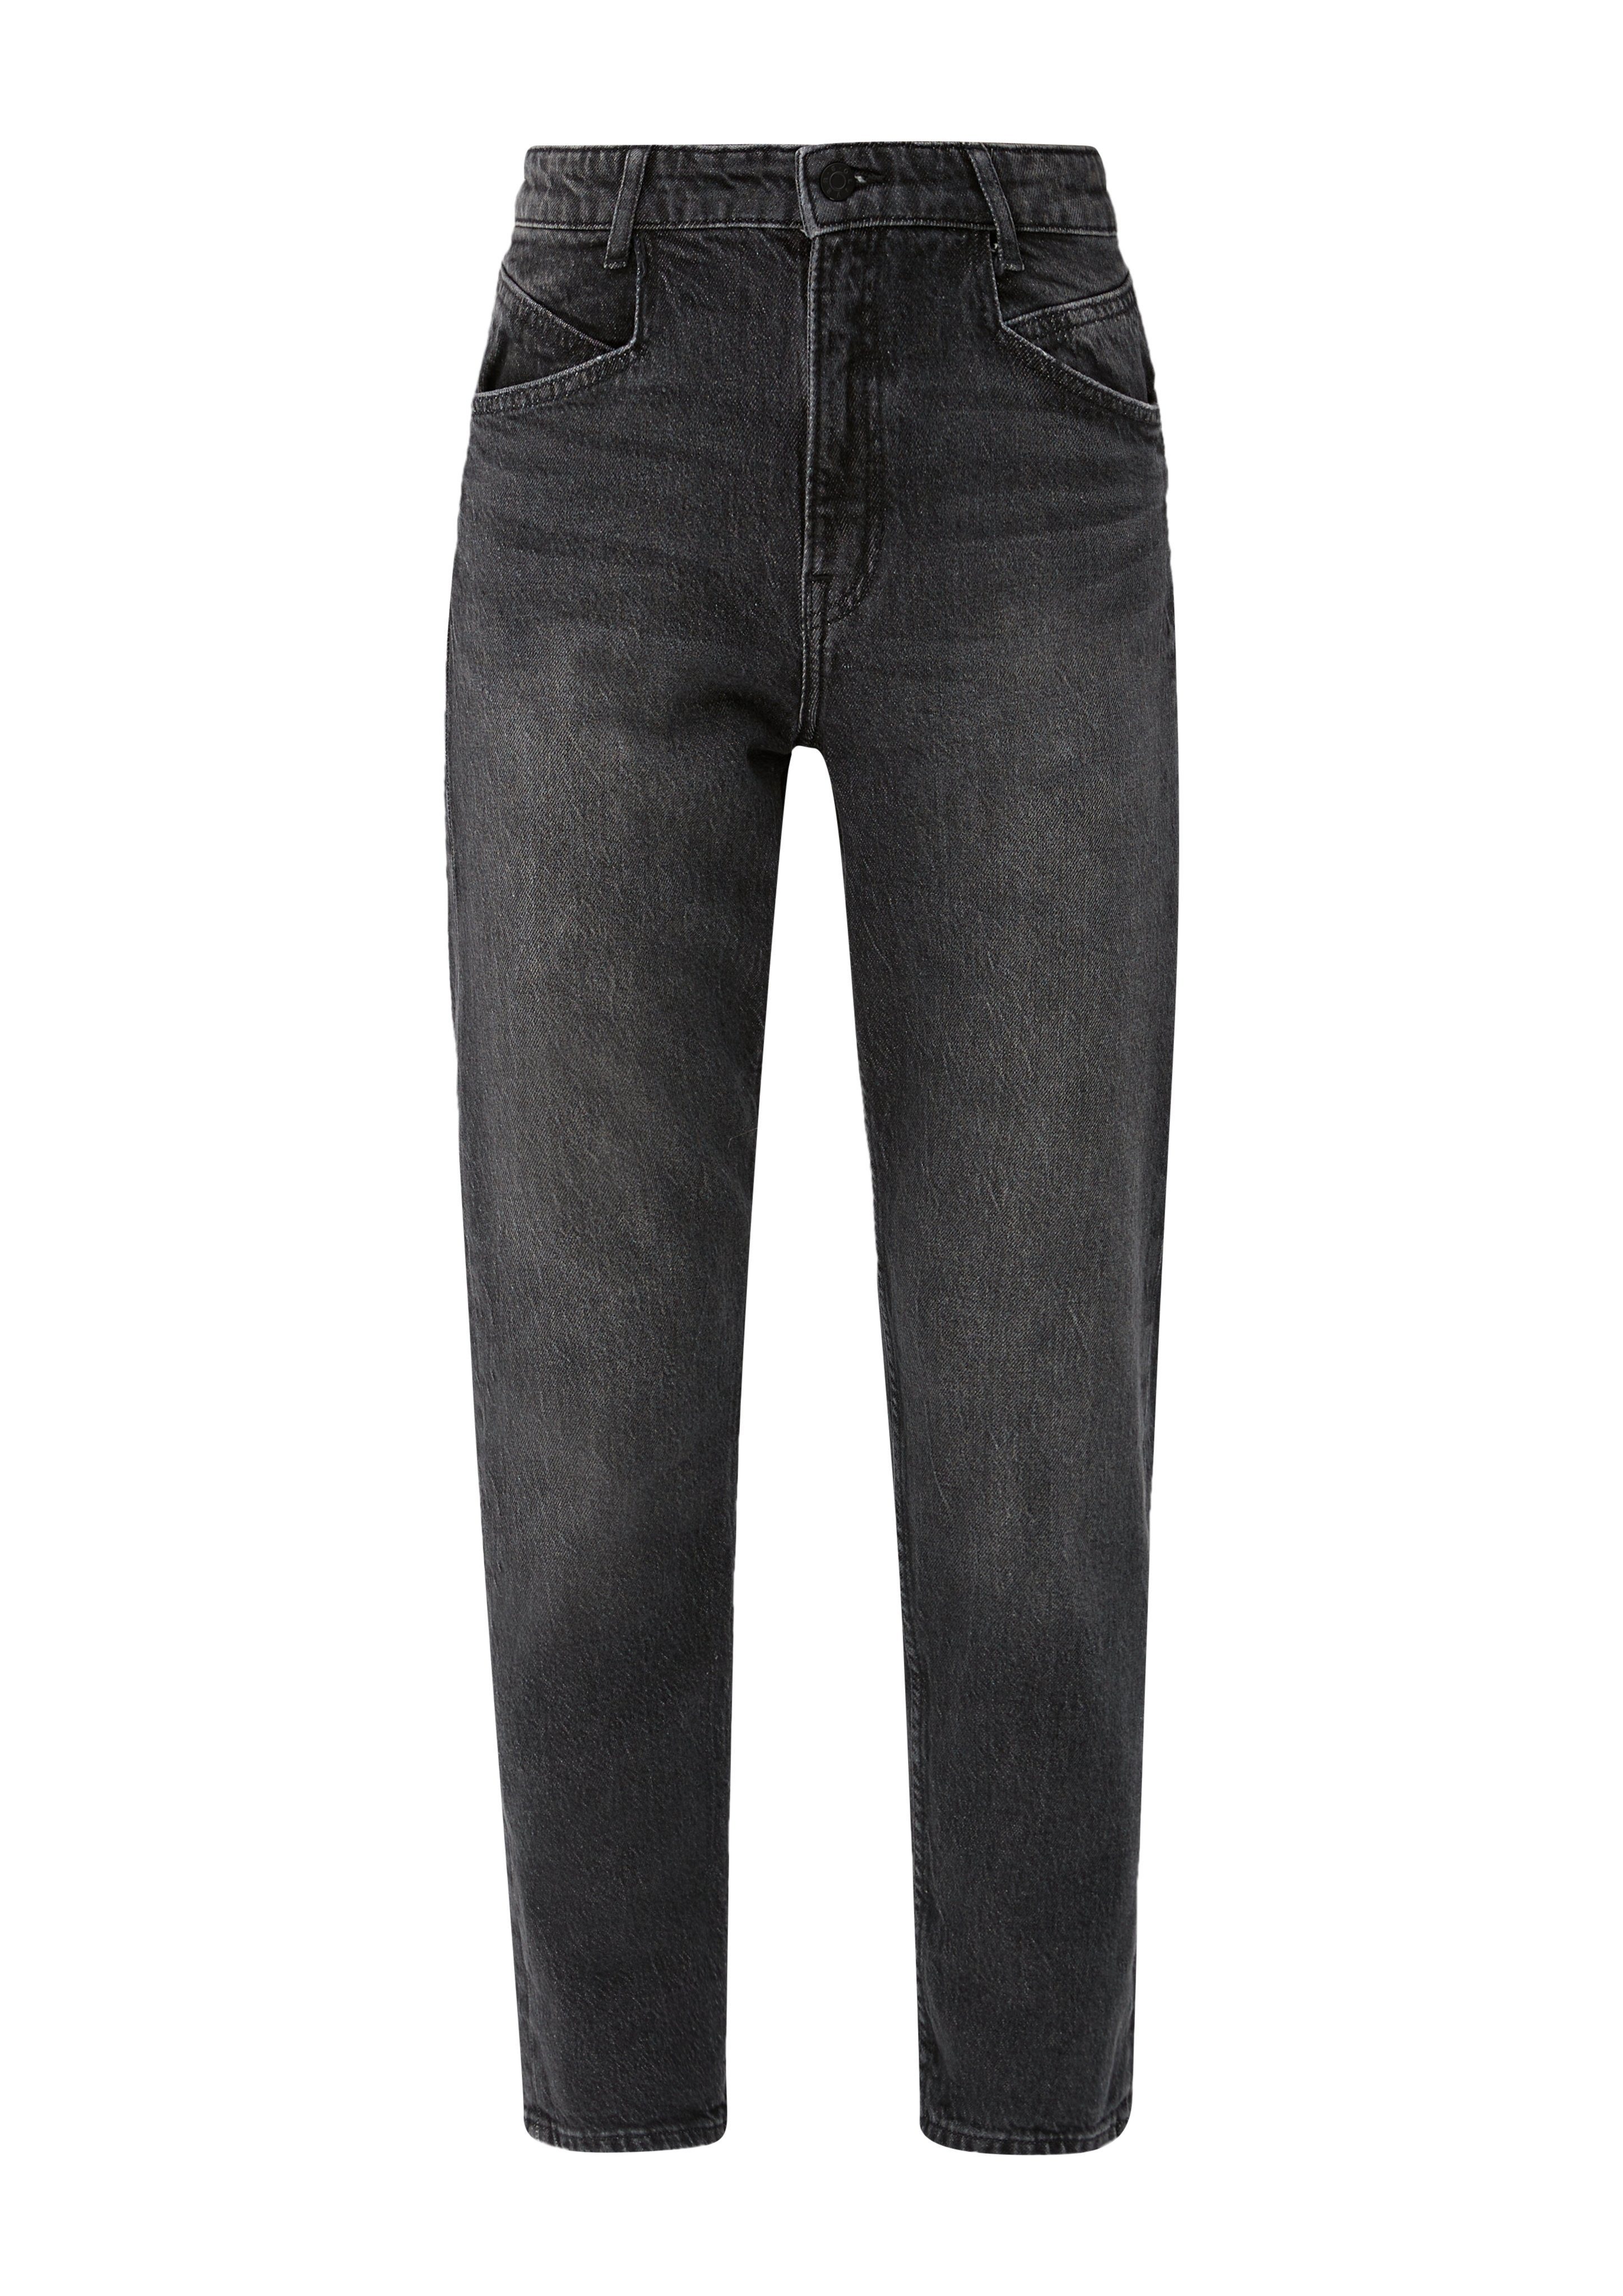 Slim grau mit s.Oliver Leg 7/8-Jeans 7/8-Jeans